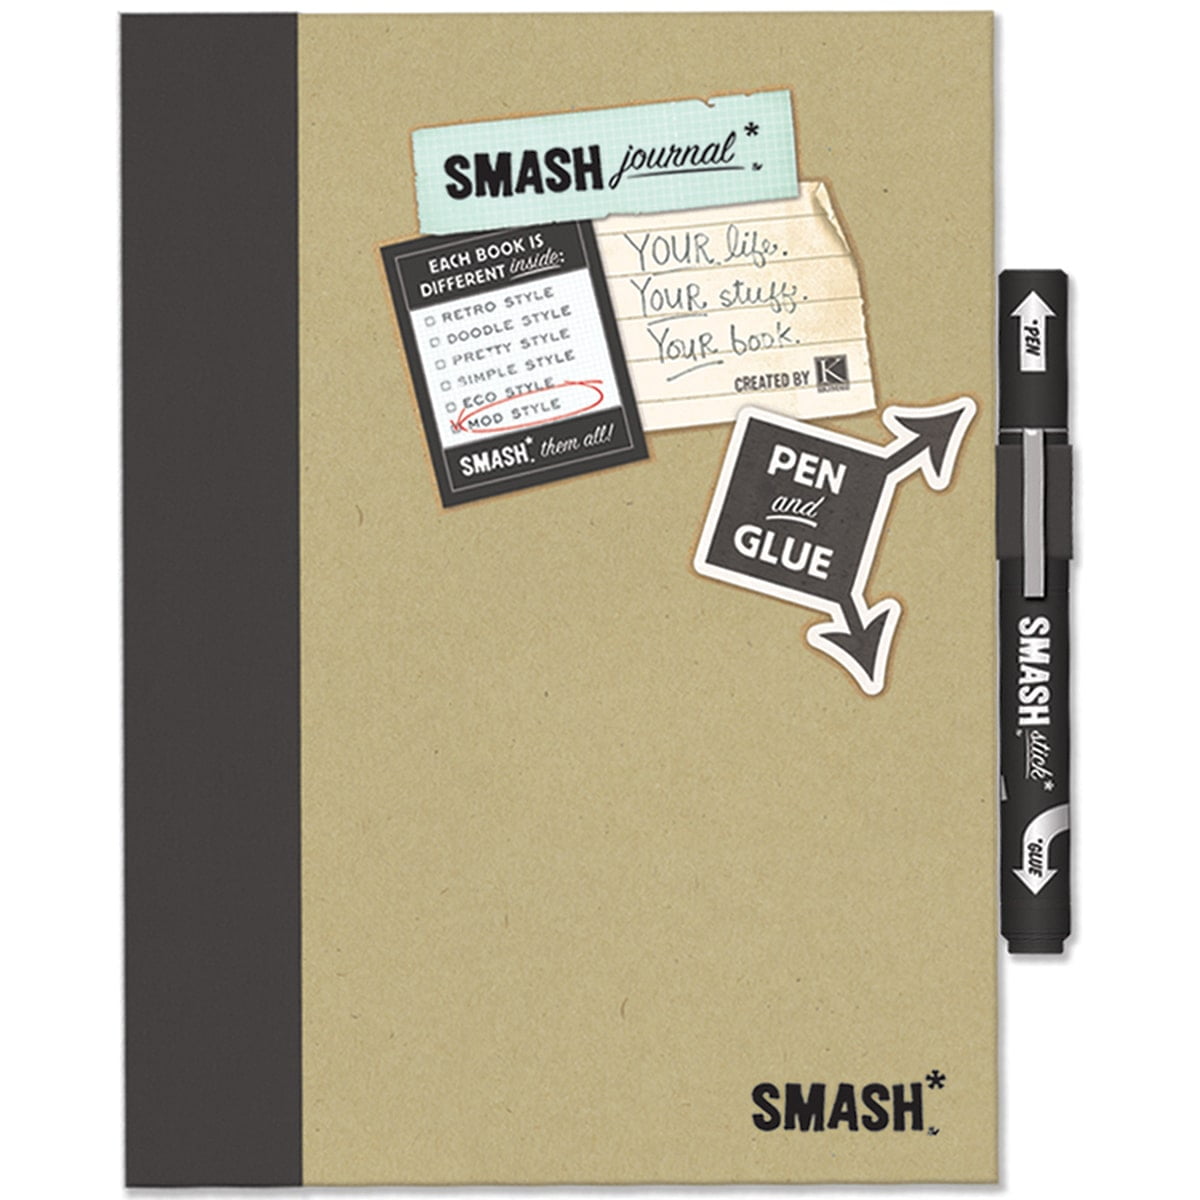 School K&Company SMASH Scrapbooking Folio Kit 